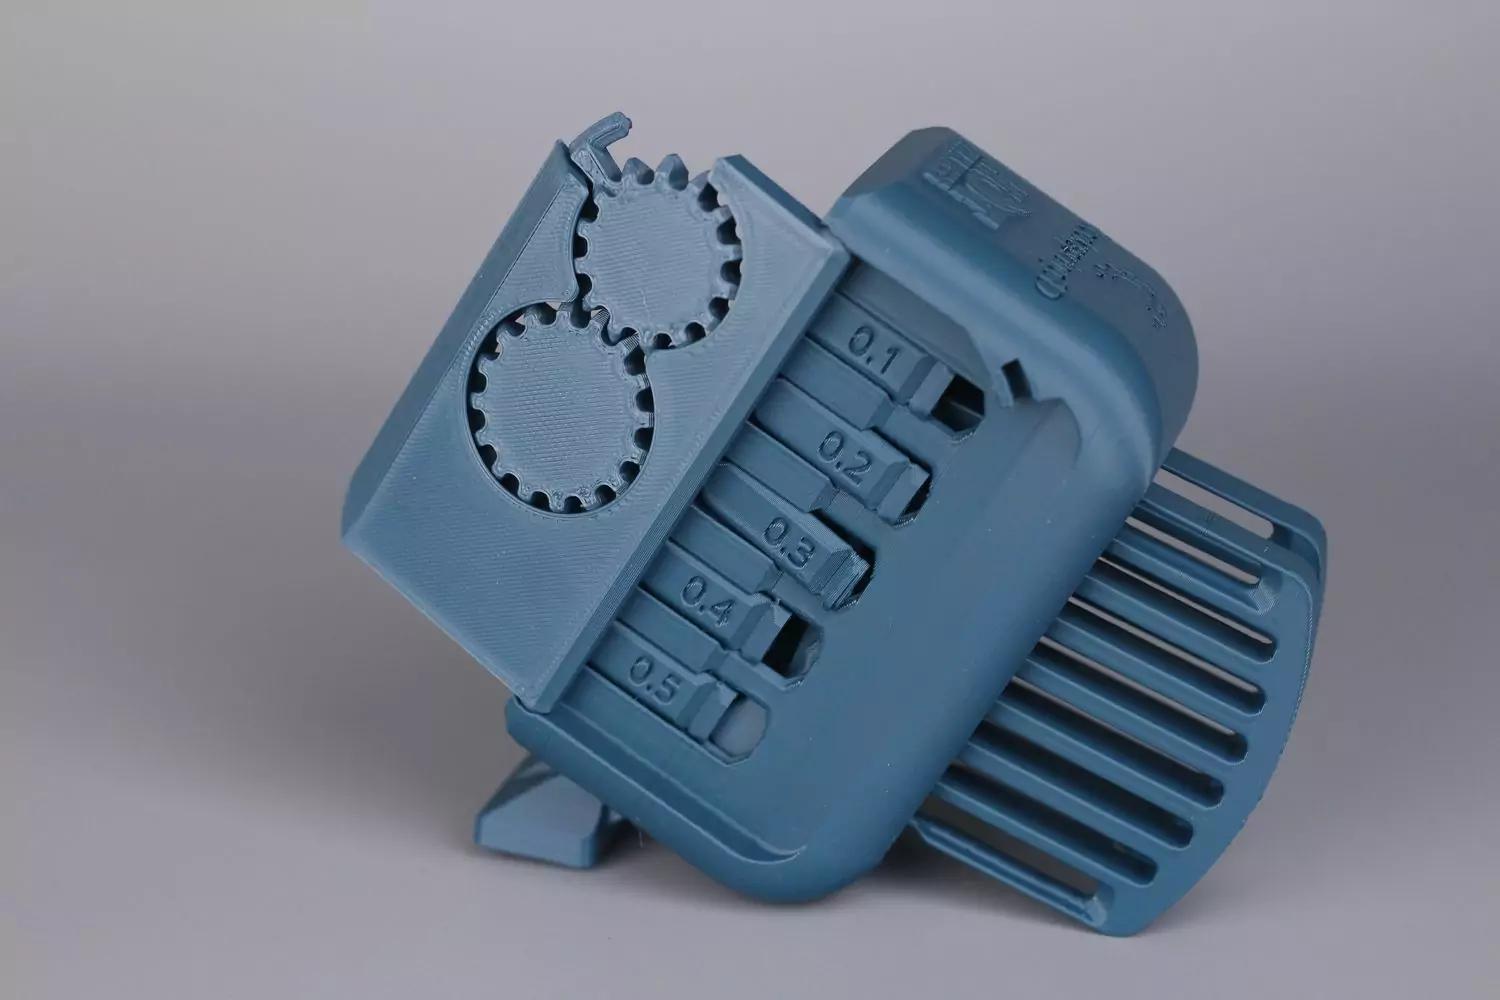 Torture Toaster calibration test on BIQU Hurakan5 | BIQU Hurakan Review: Klipper Firmware on a Budget